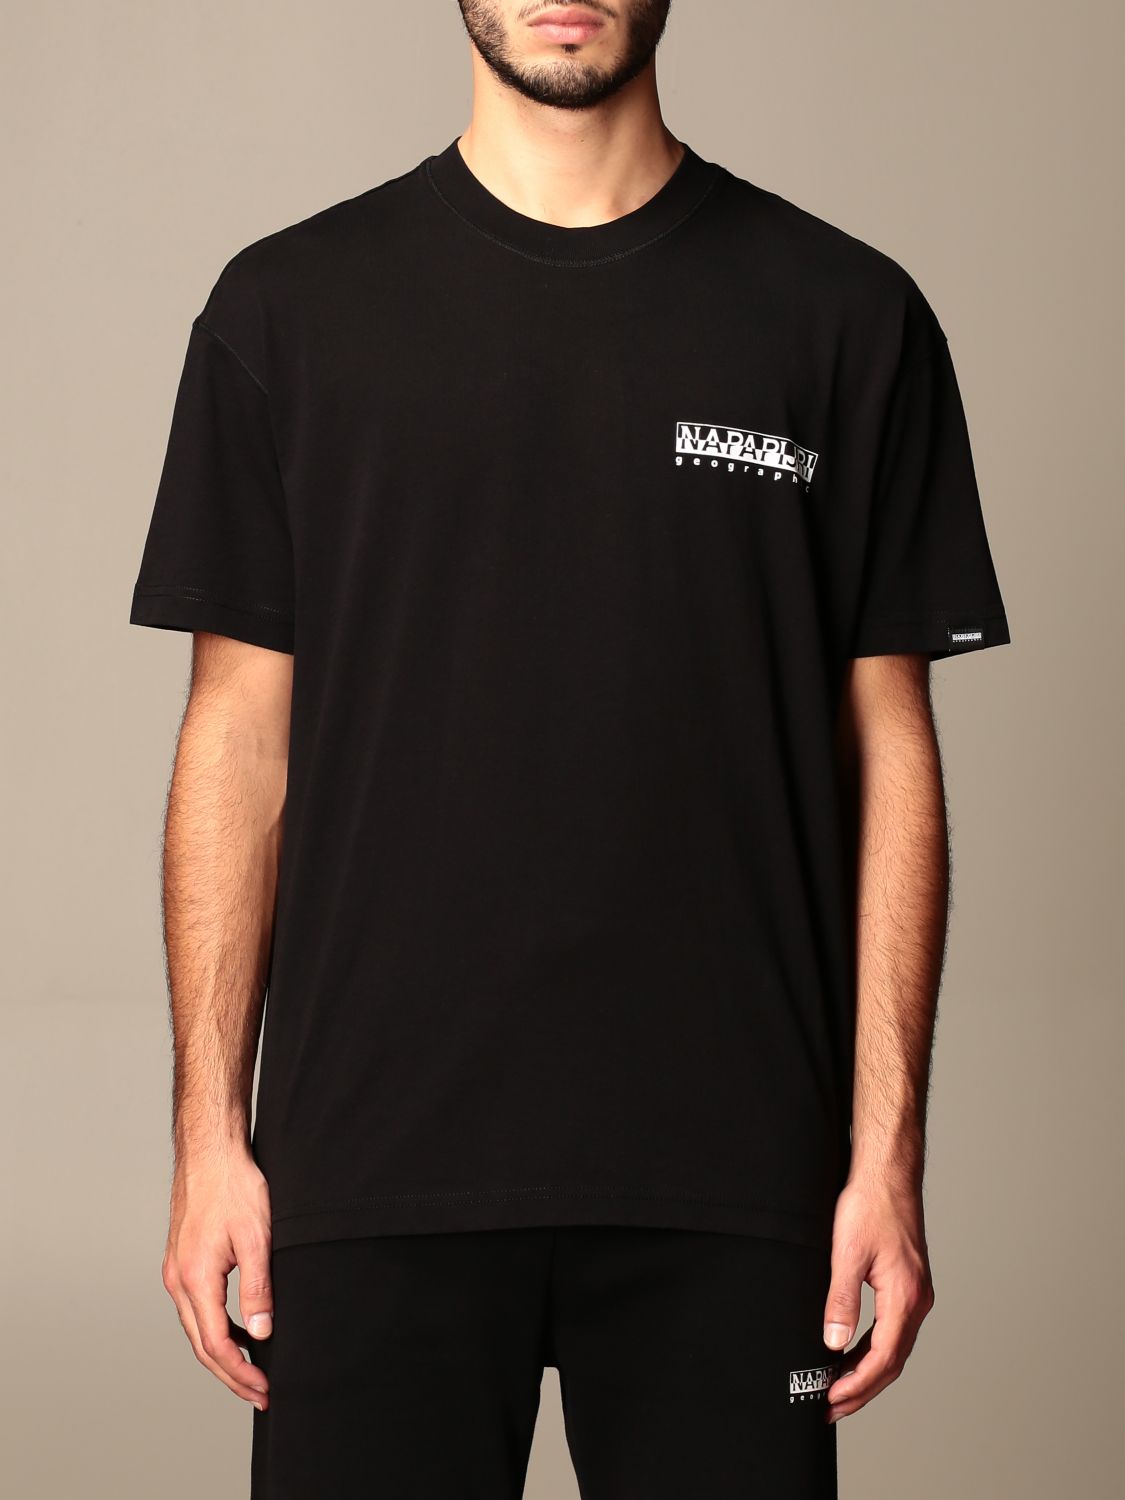 NAPAPIJRI: T-shirt with logo - Black | NP0A4EJG0411 online on GIGLIO.COM